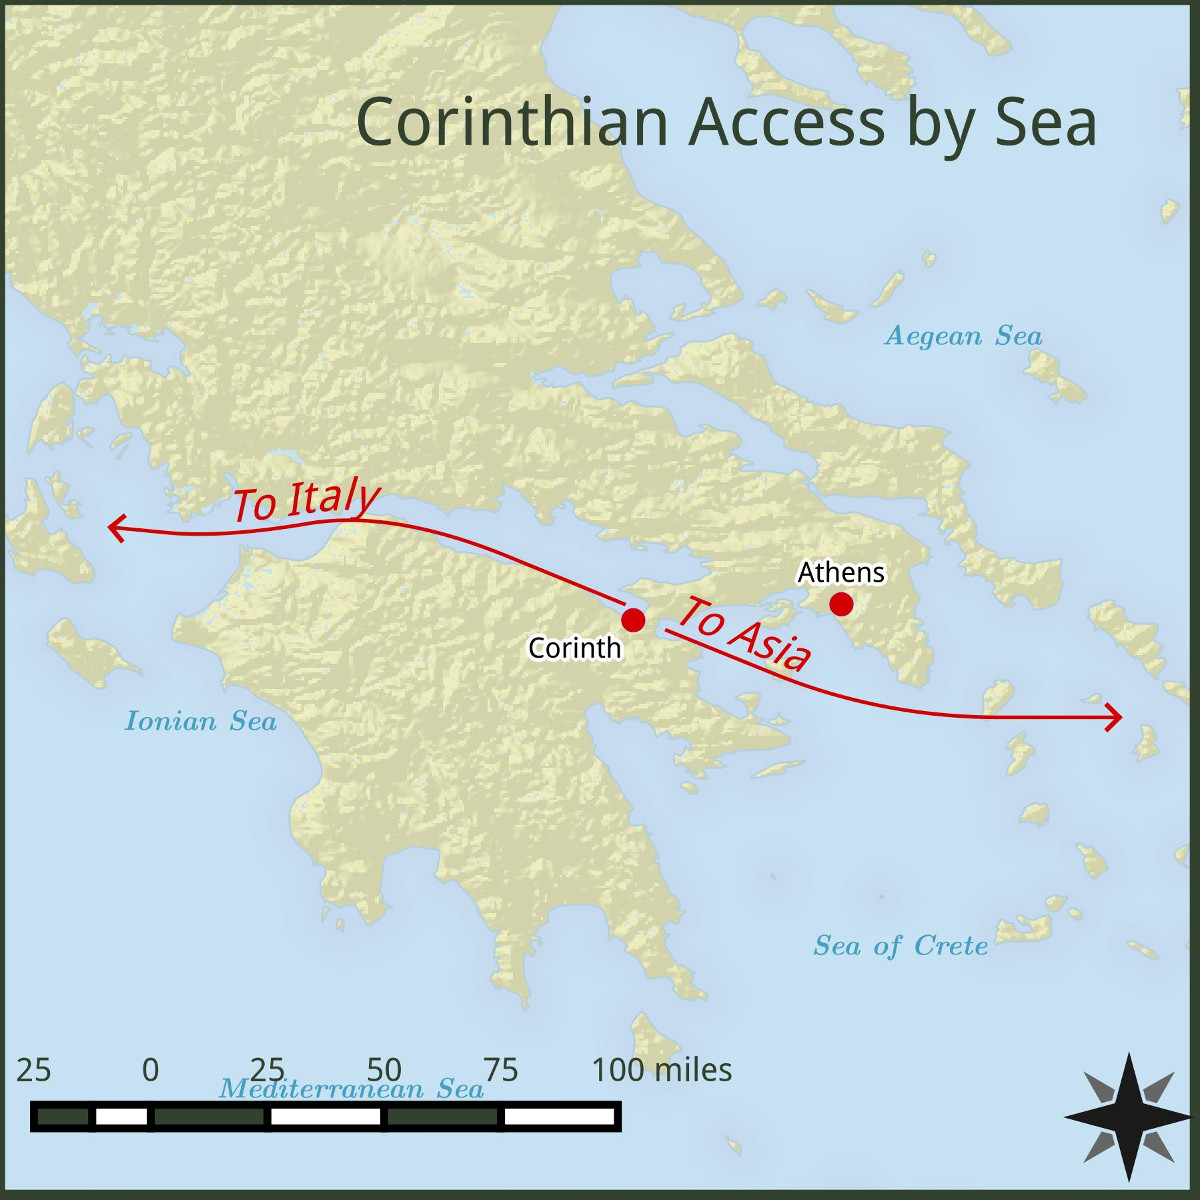 Corinth Access by Sea